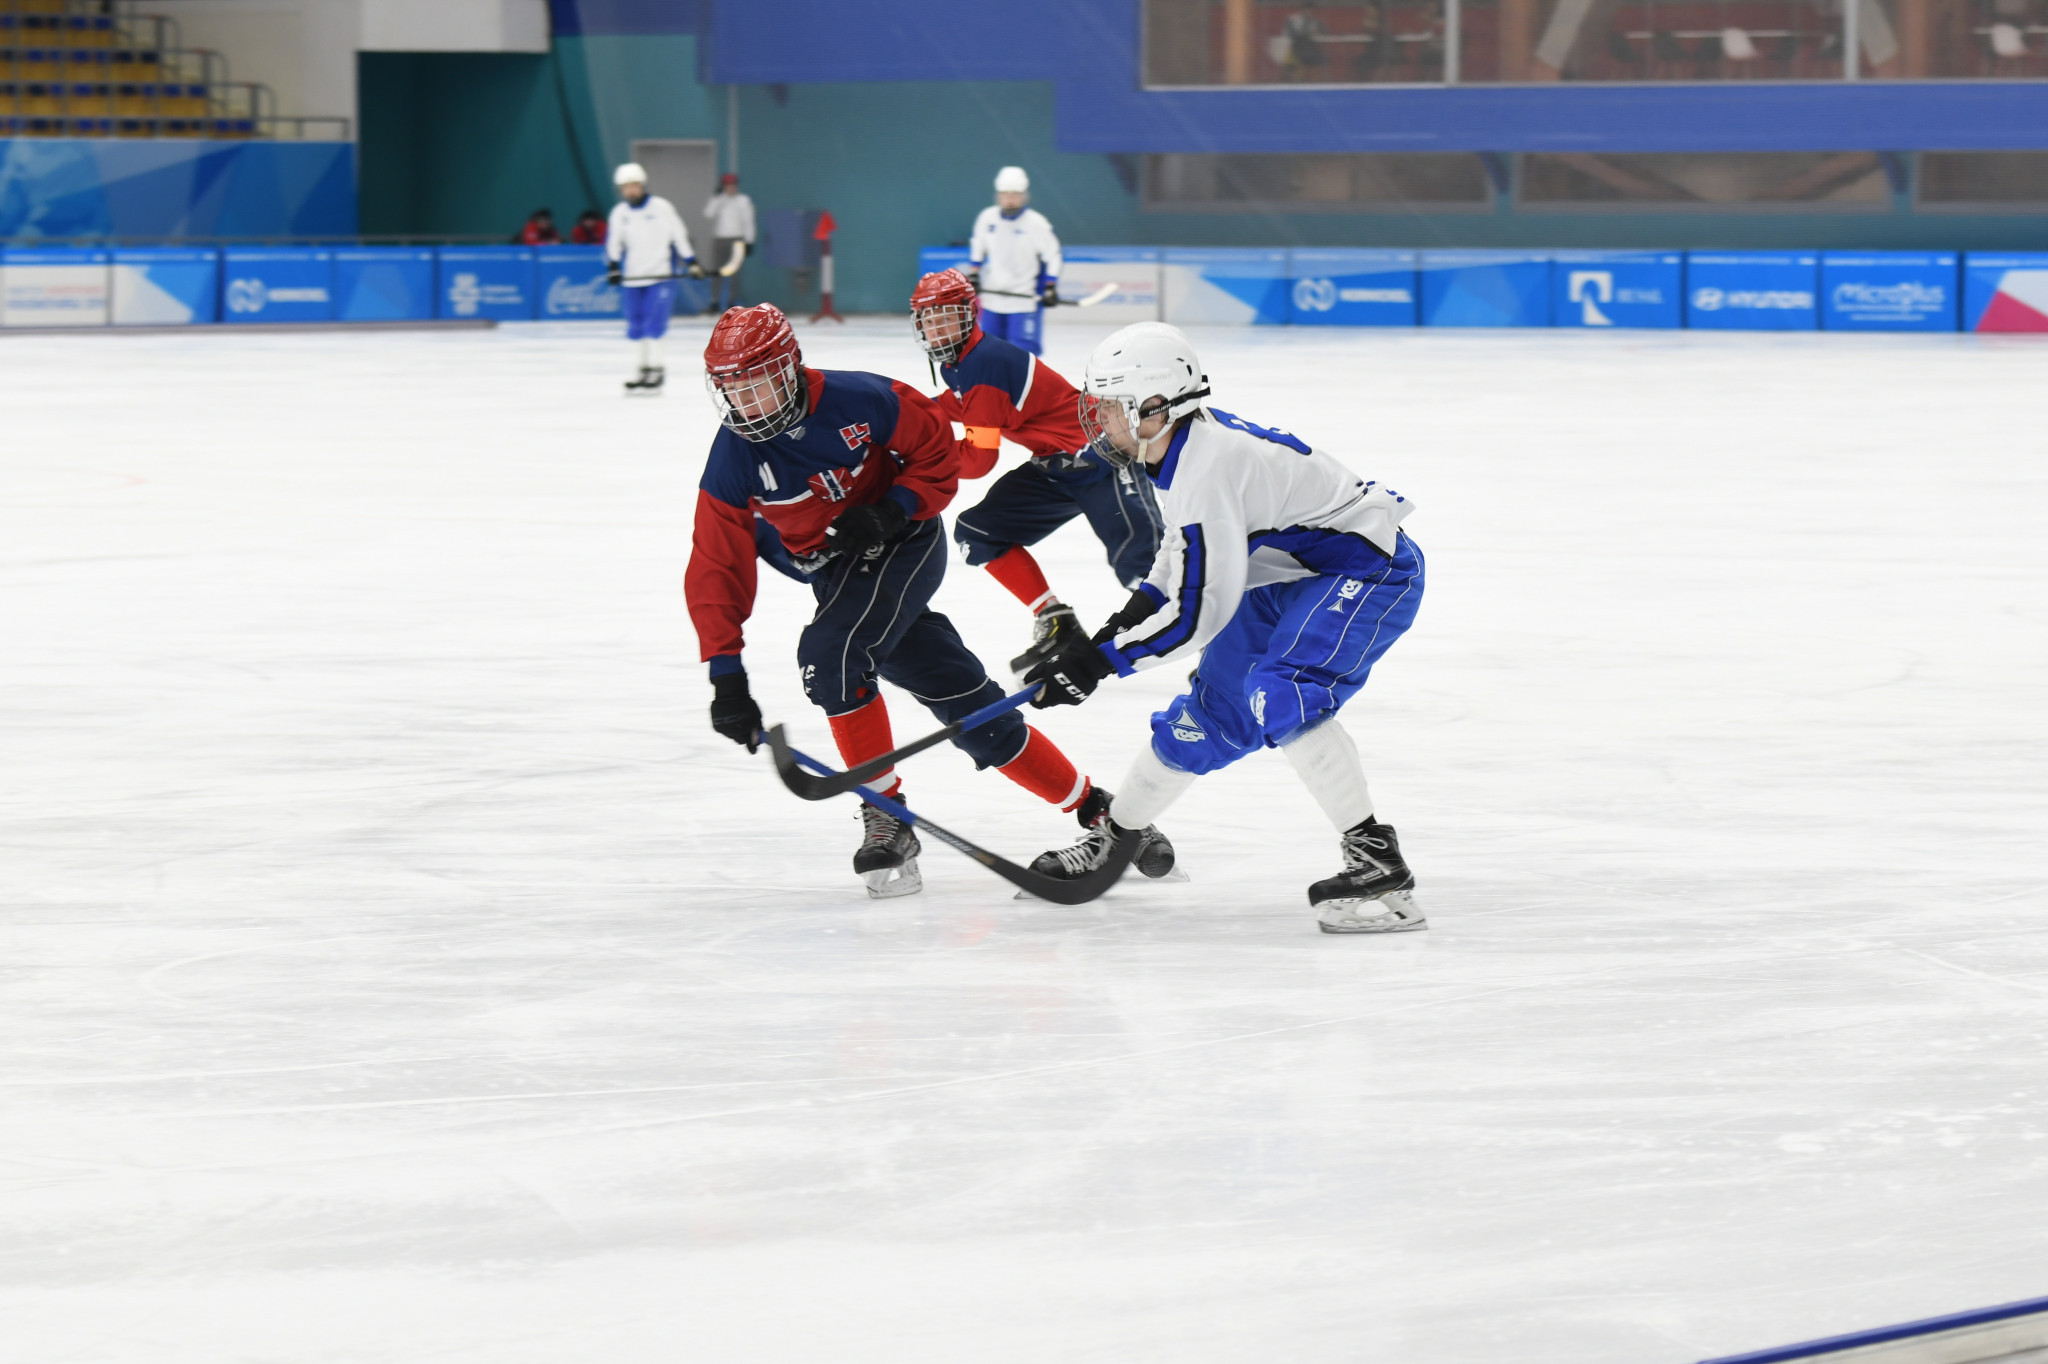 The competition took place at the Yenisei Ice Stadium ©Krasnoyarsk 2019